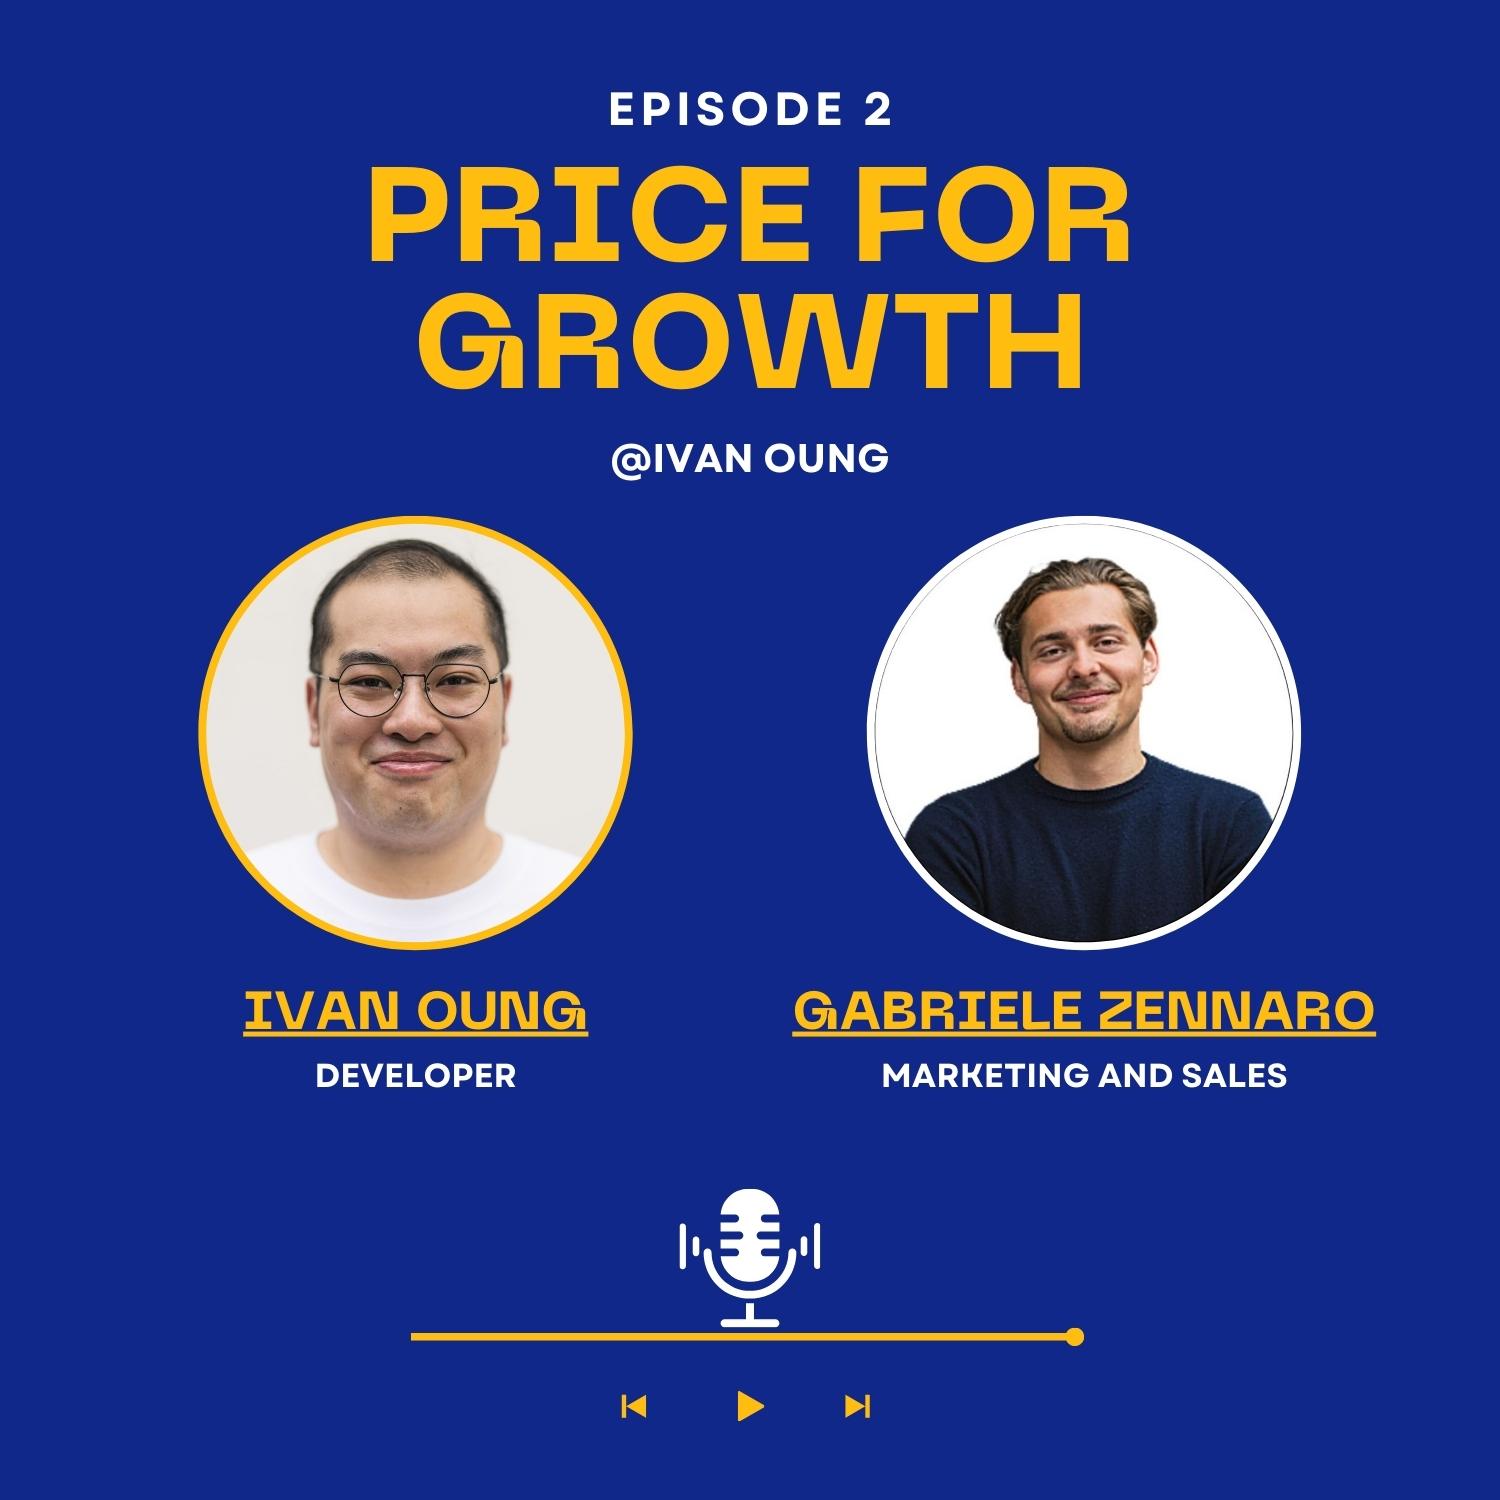 Gabriele Zennaro 在 Ivan Oung 的播客「成長的價格」中談論產品管理。